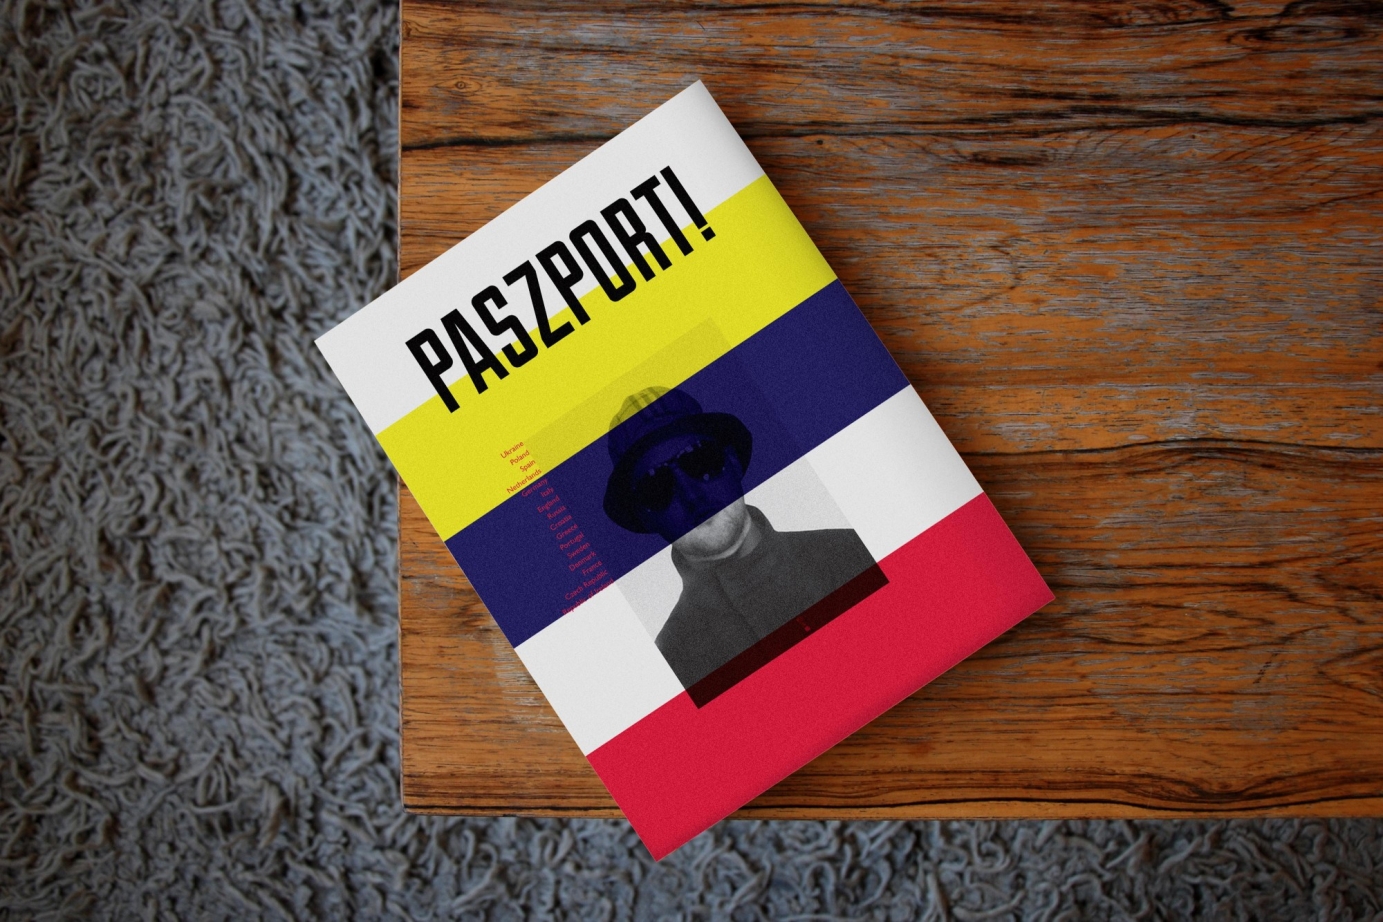 Paszport! Magazine